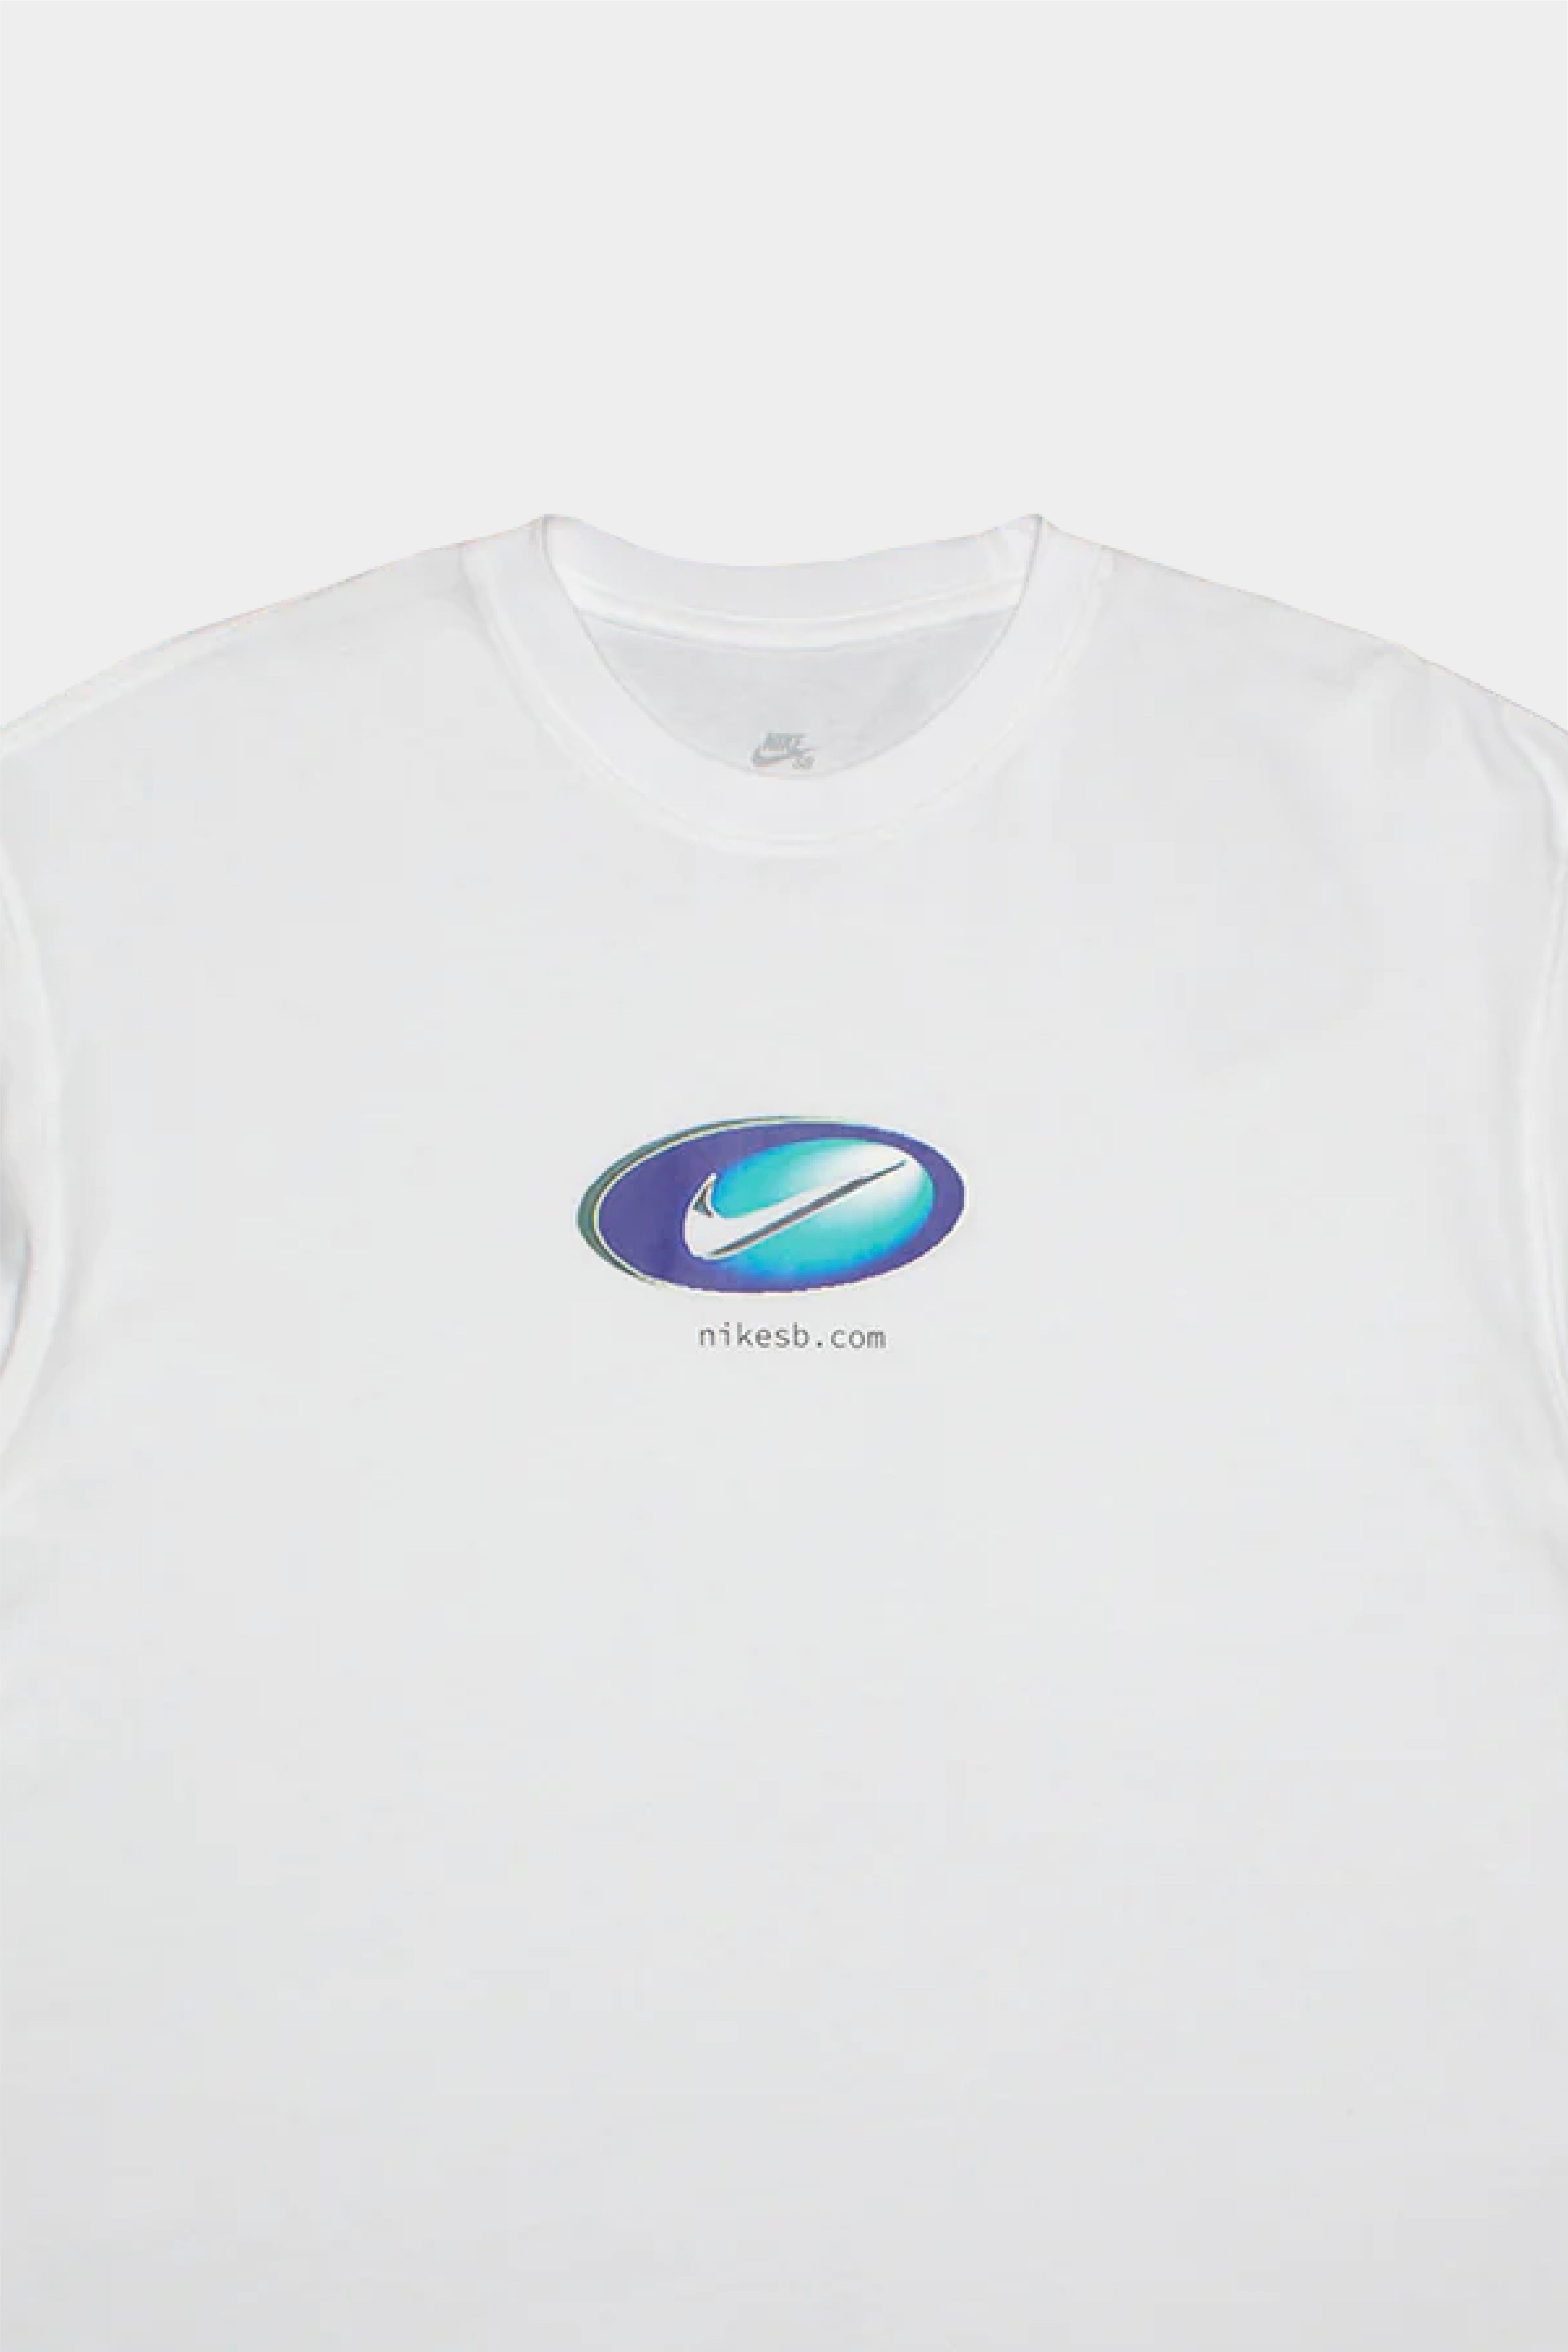 Selectshop FRAME - NIKE SB Y2K Tee T-Shirts Concept Store Dubai